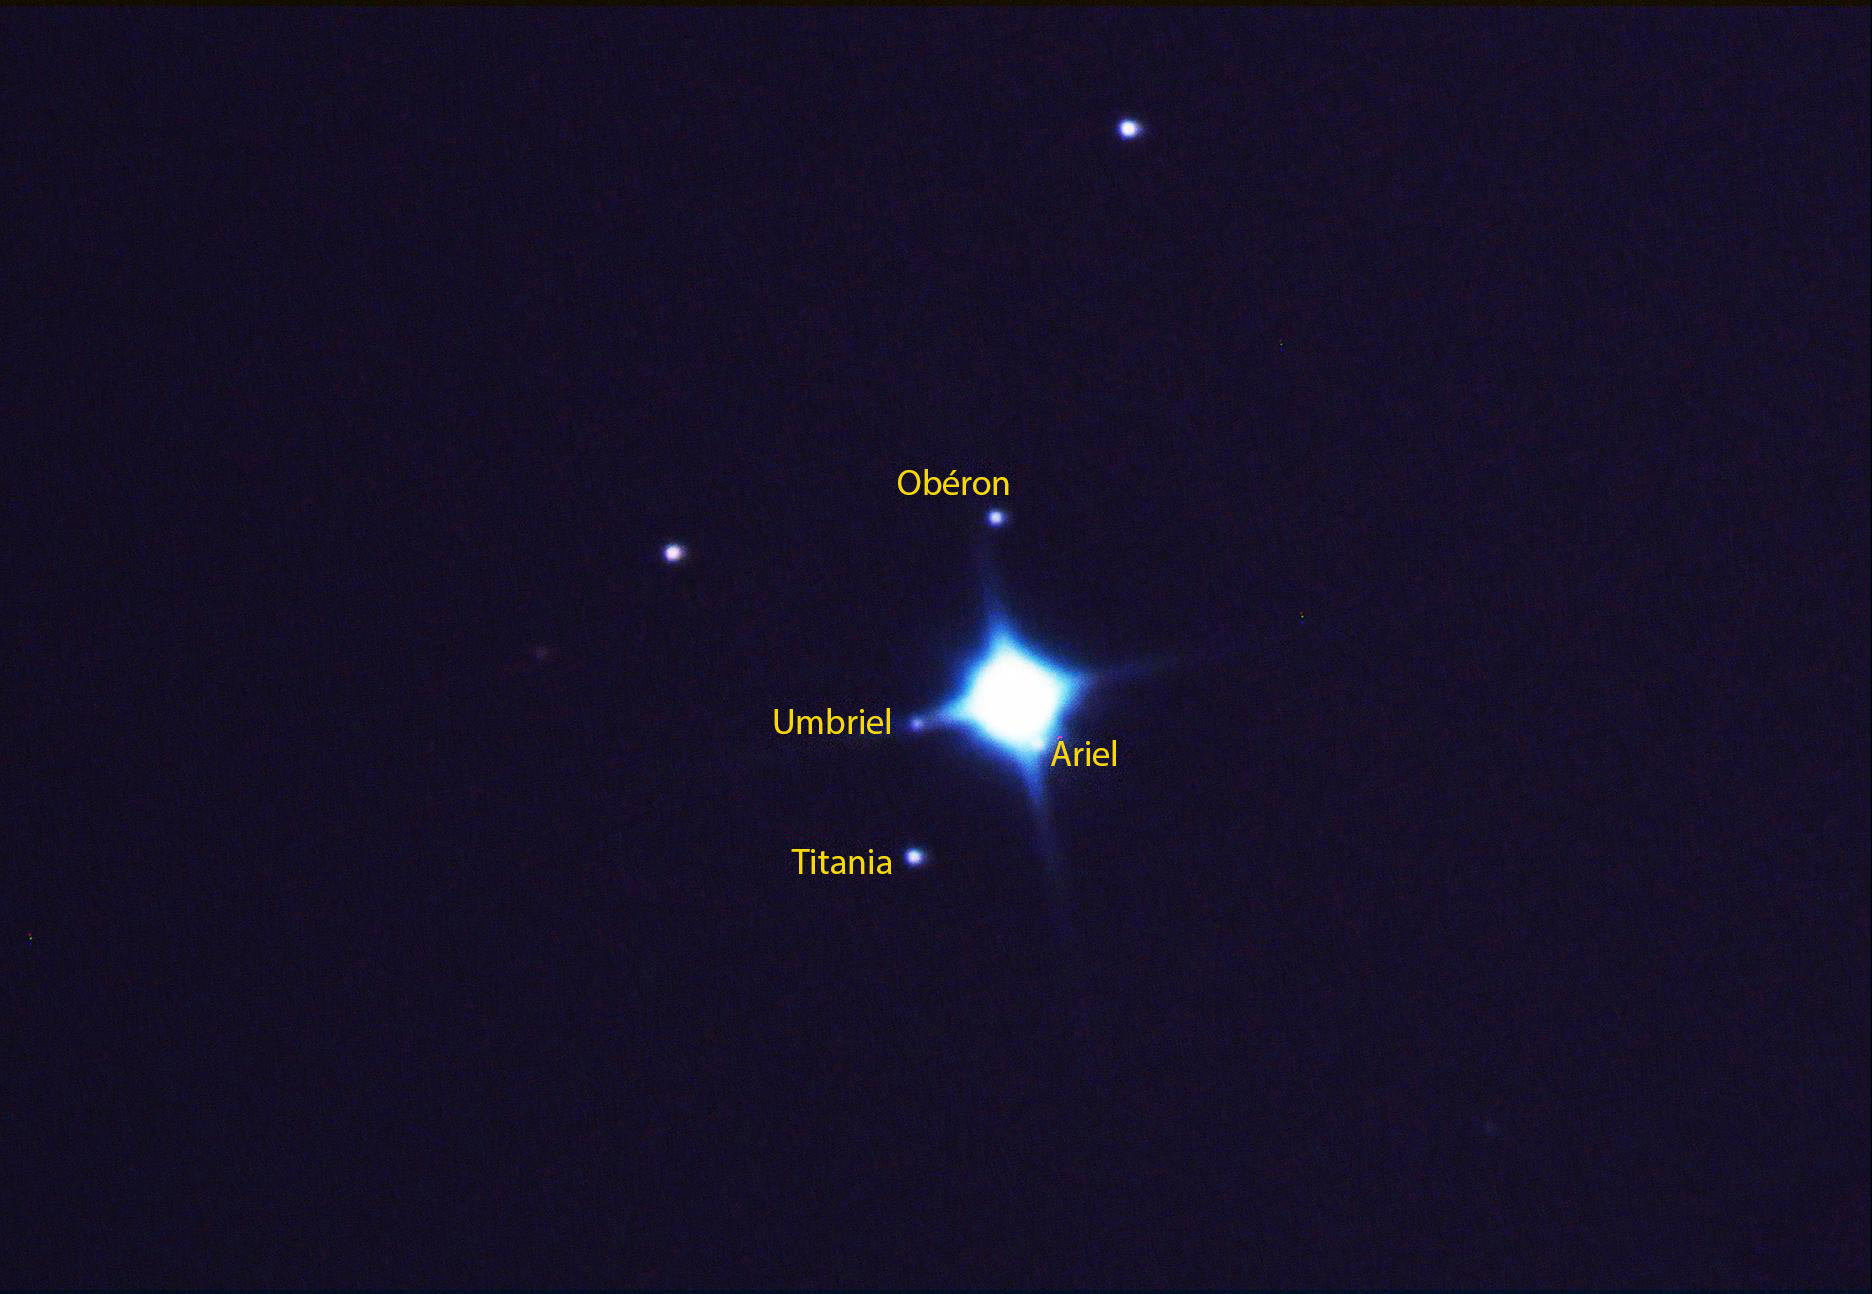 Uranus24janvierSBCROP_S-Brunet_cor_RVB.jpg